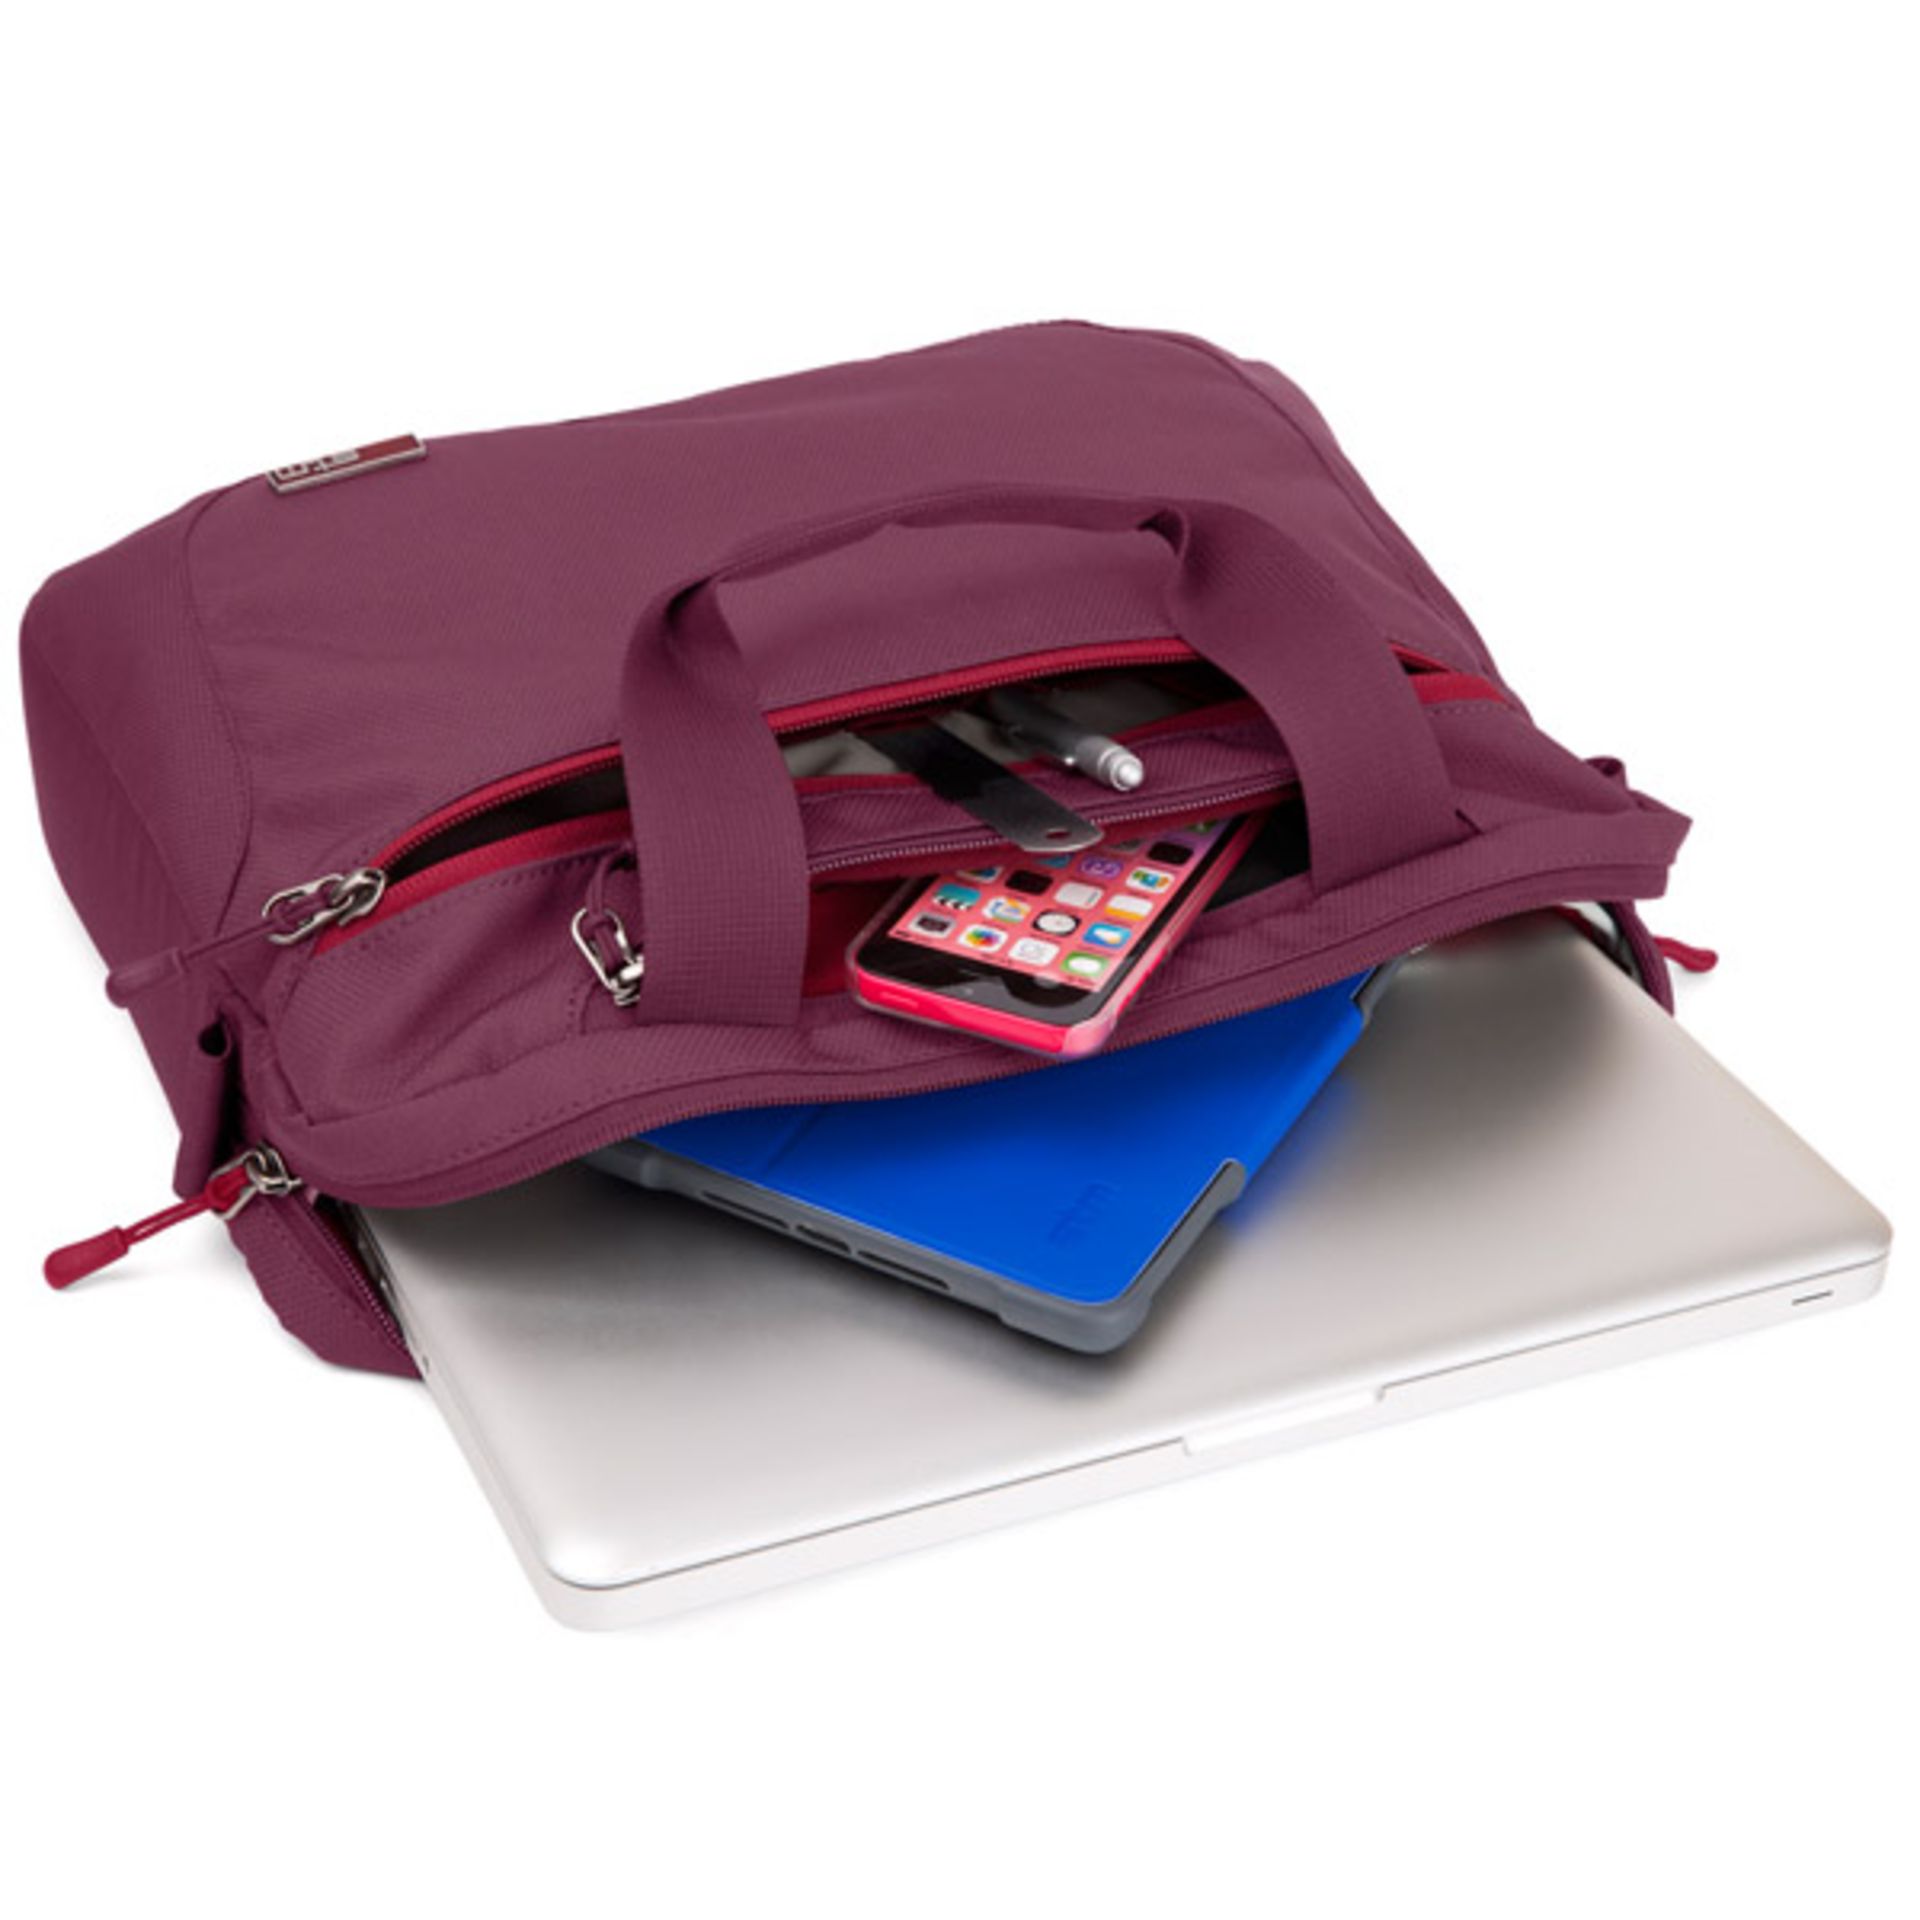 + VAT Brand New Medium Shoulder Bag - RRP Â£42.99 Amazon Price Â£33.57 - For Laptop/Tablet Up To